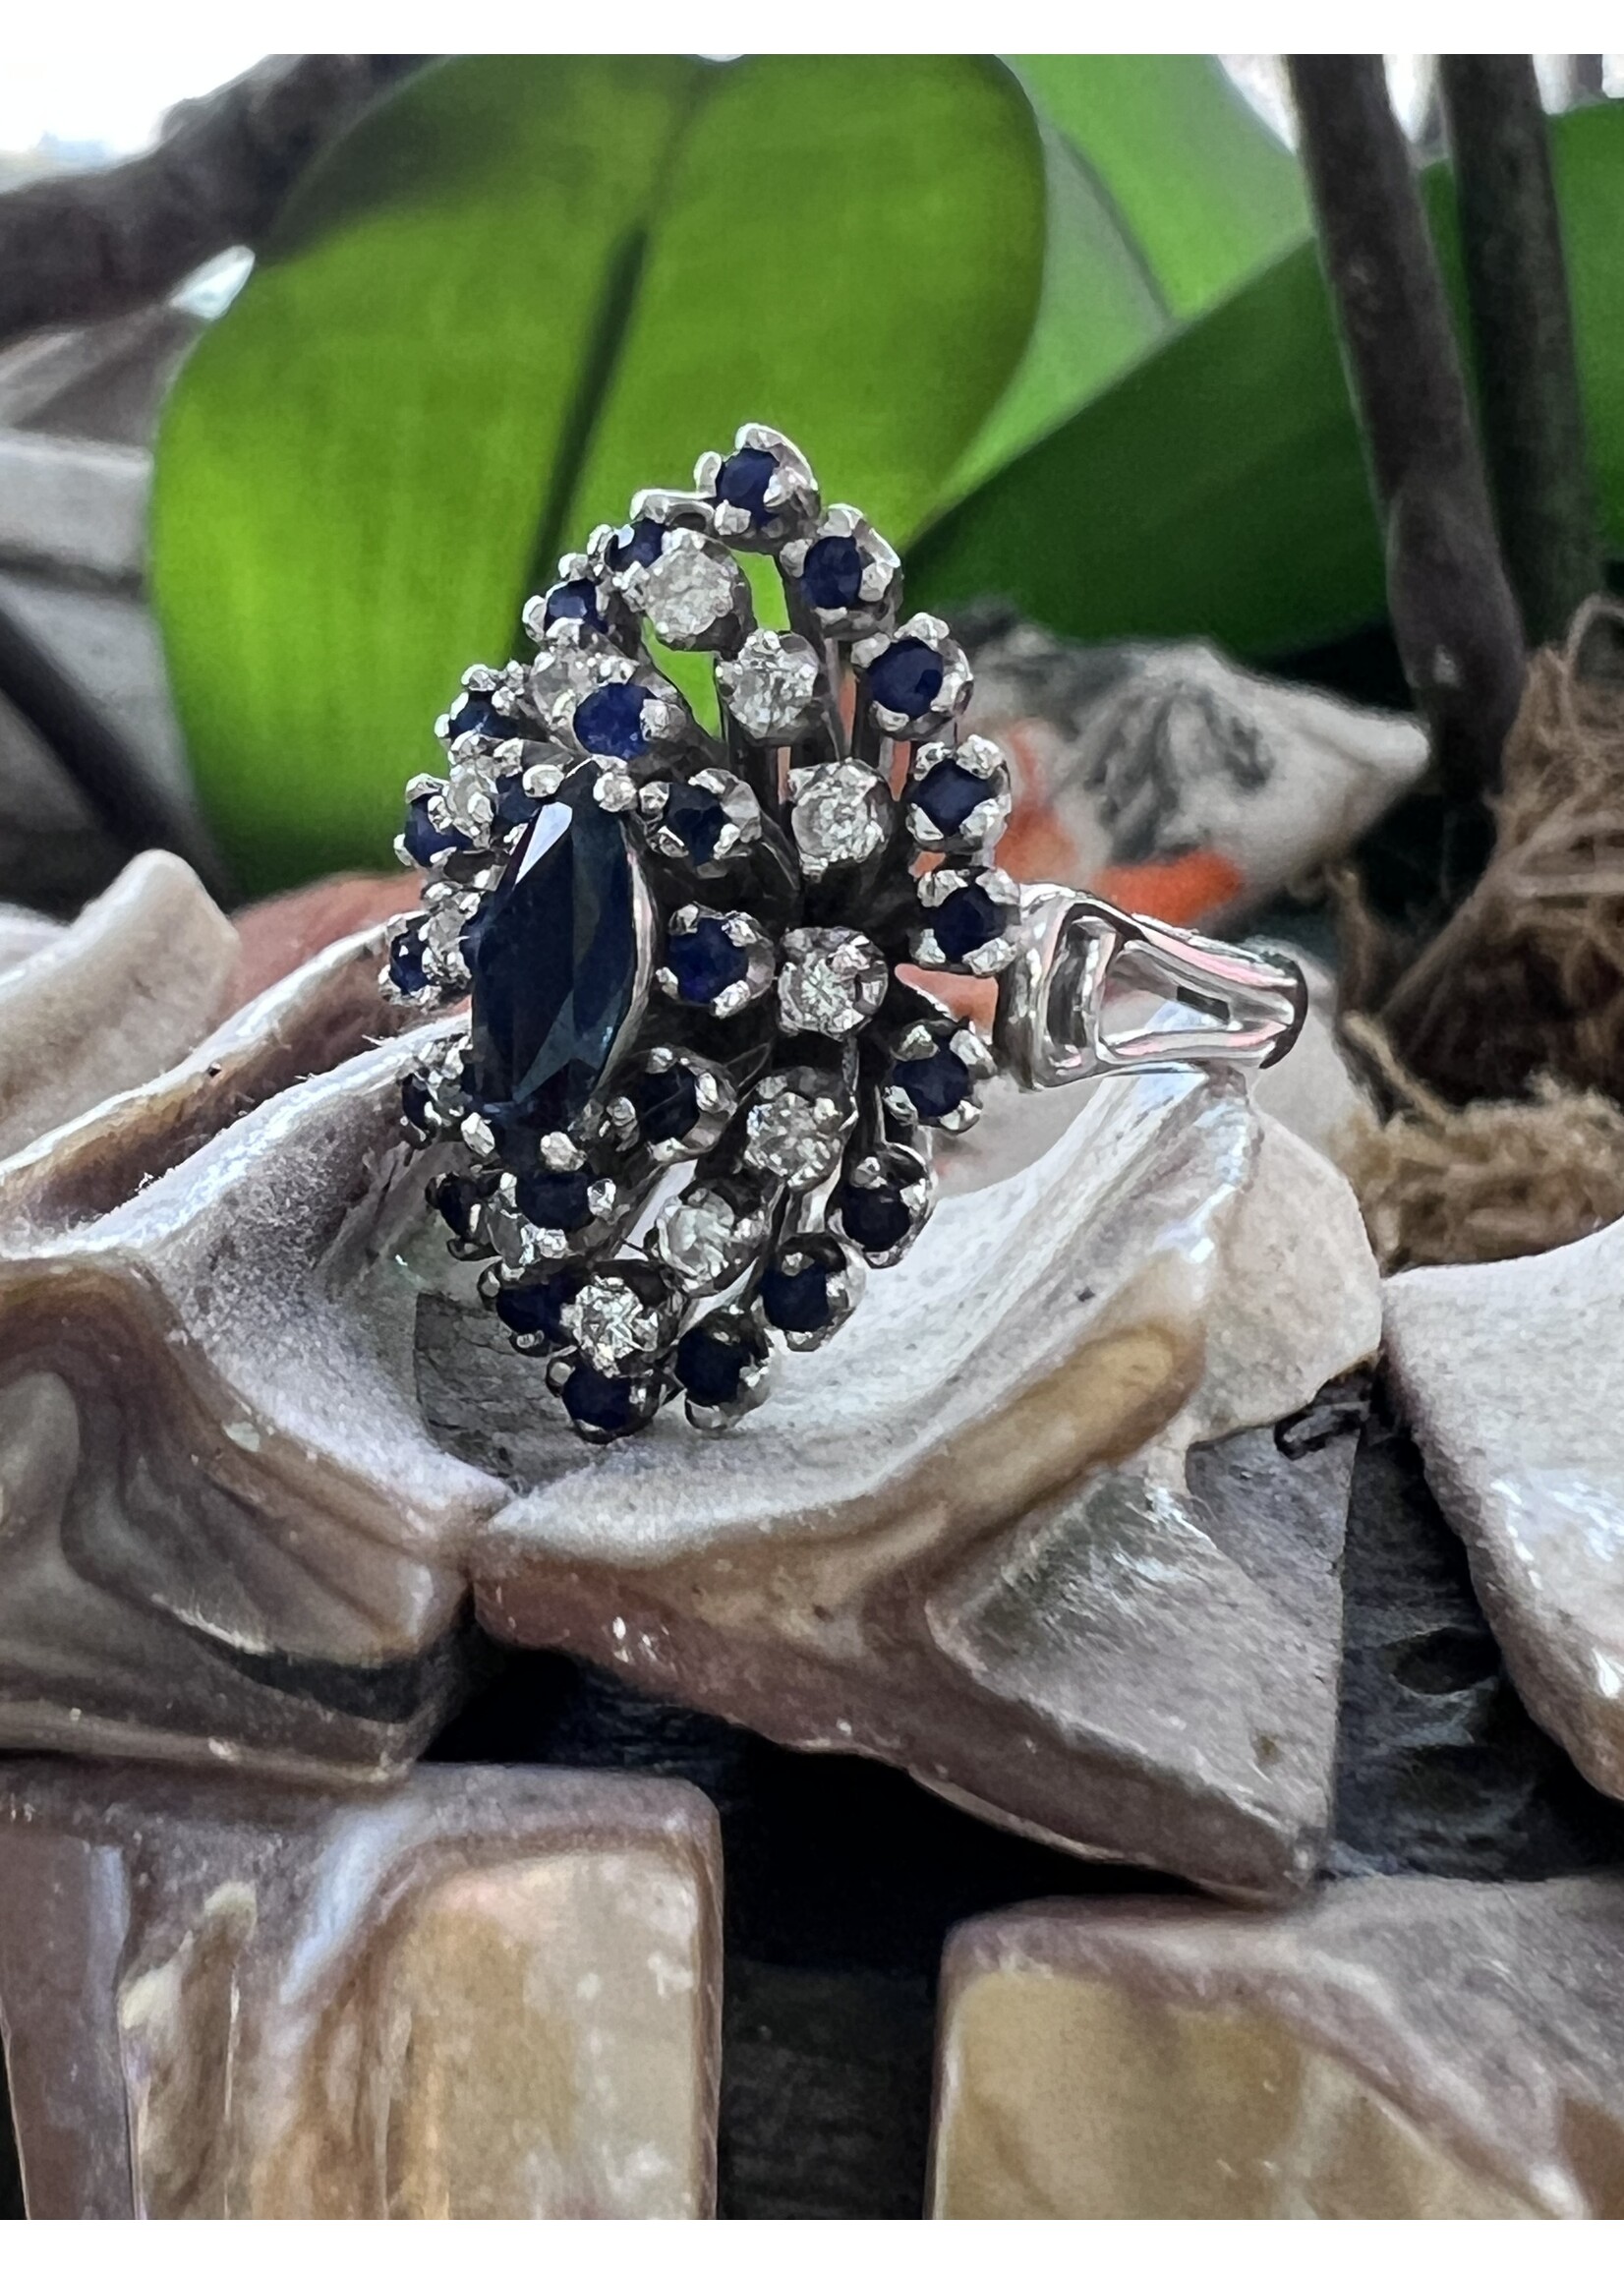 Vintage & Occasion Occasion witgouden ring met diamant en saffier